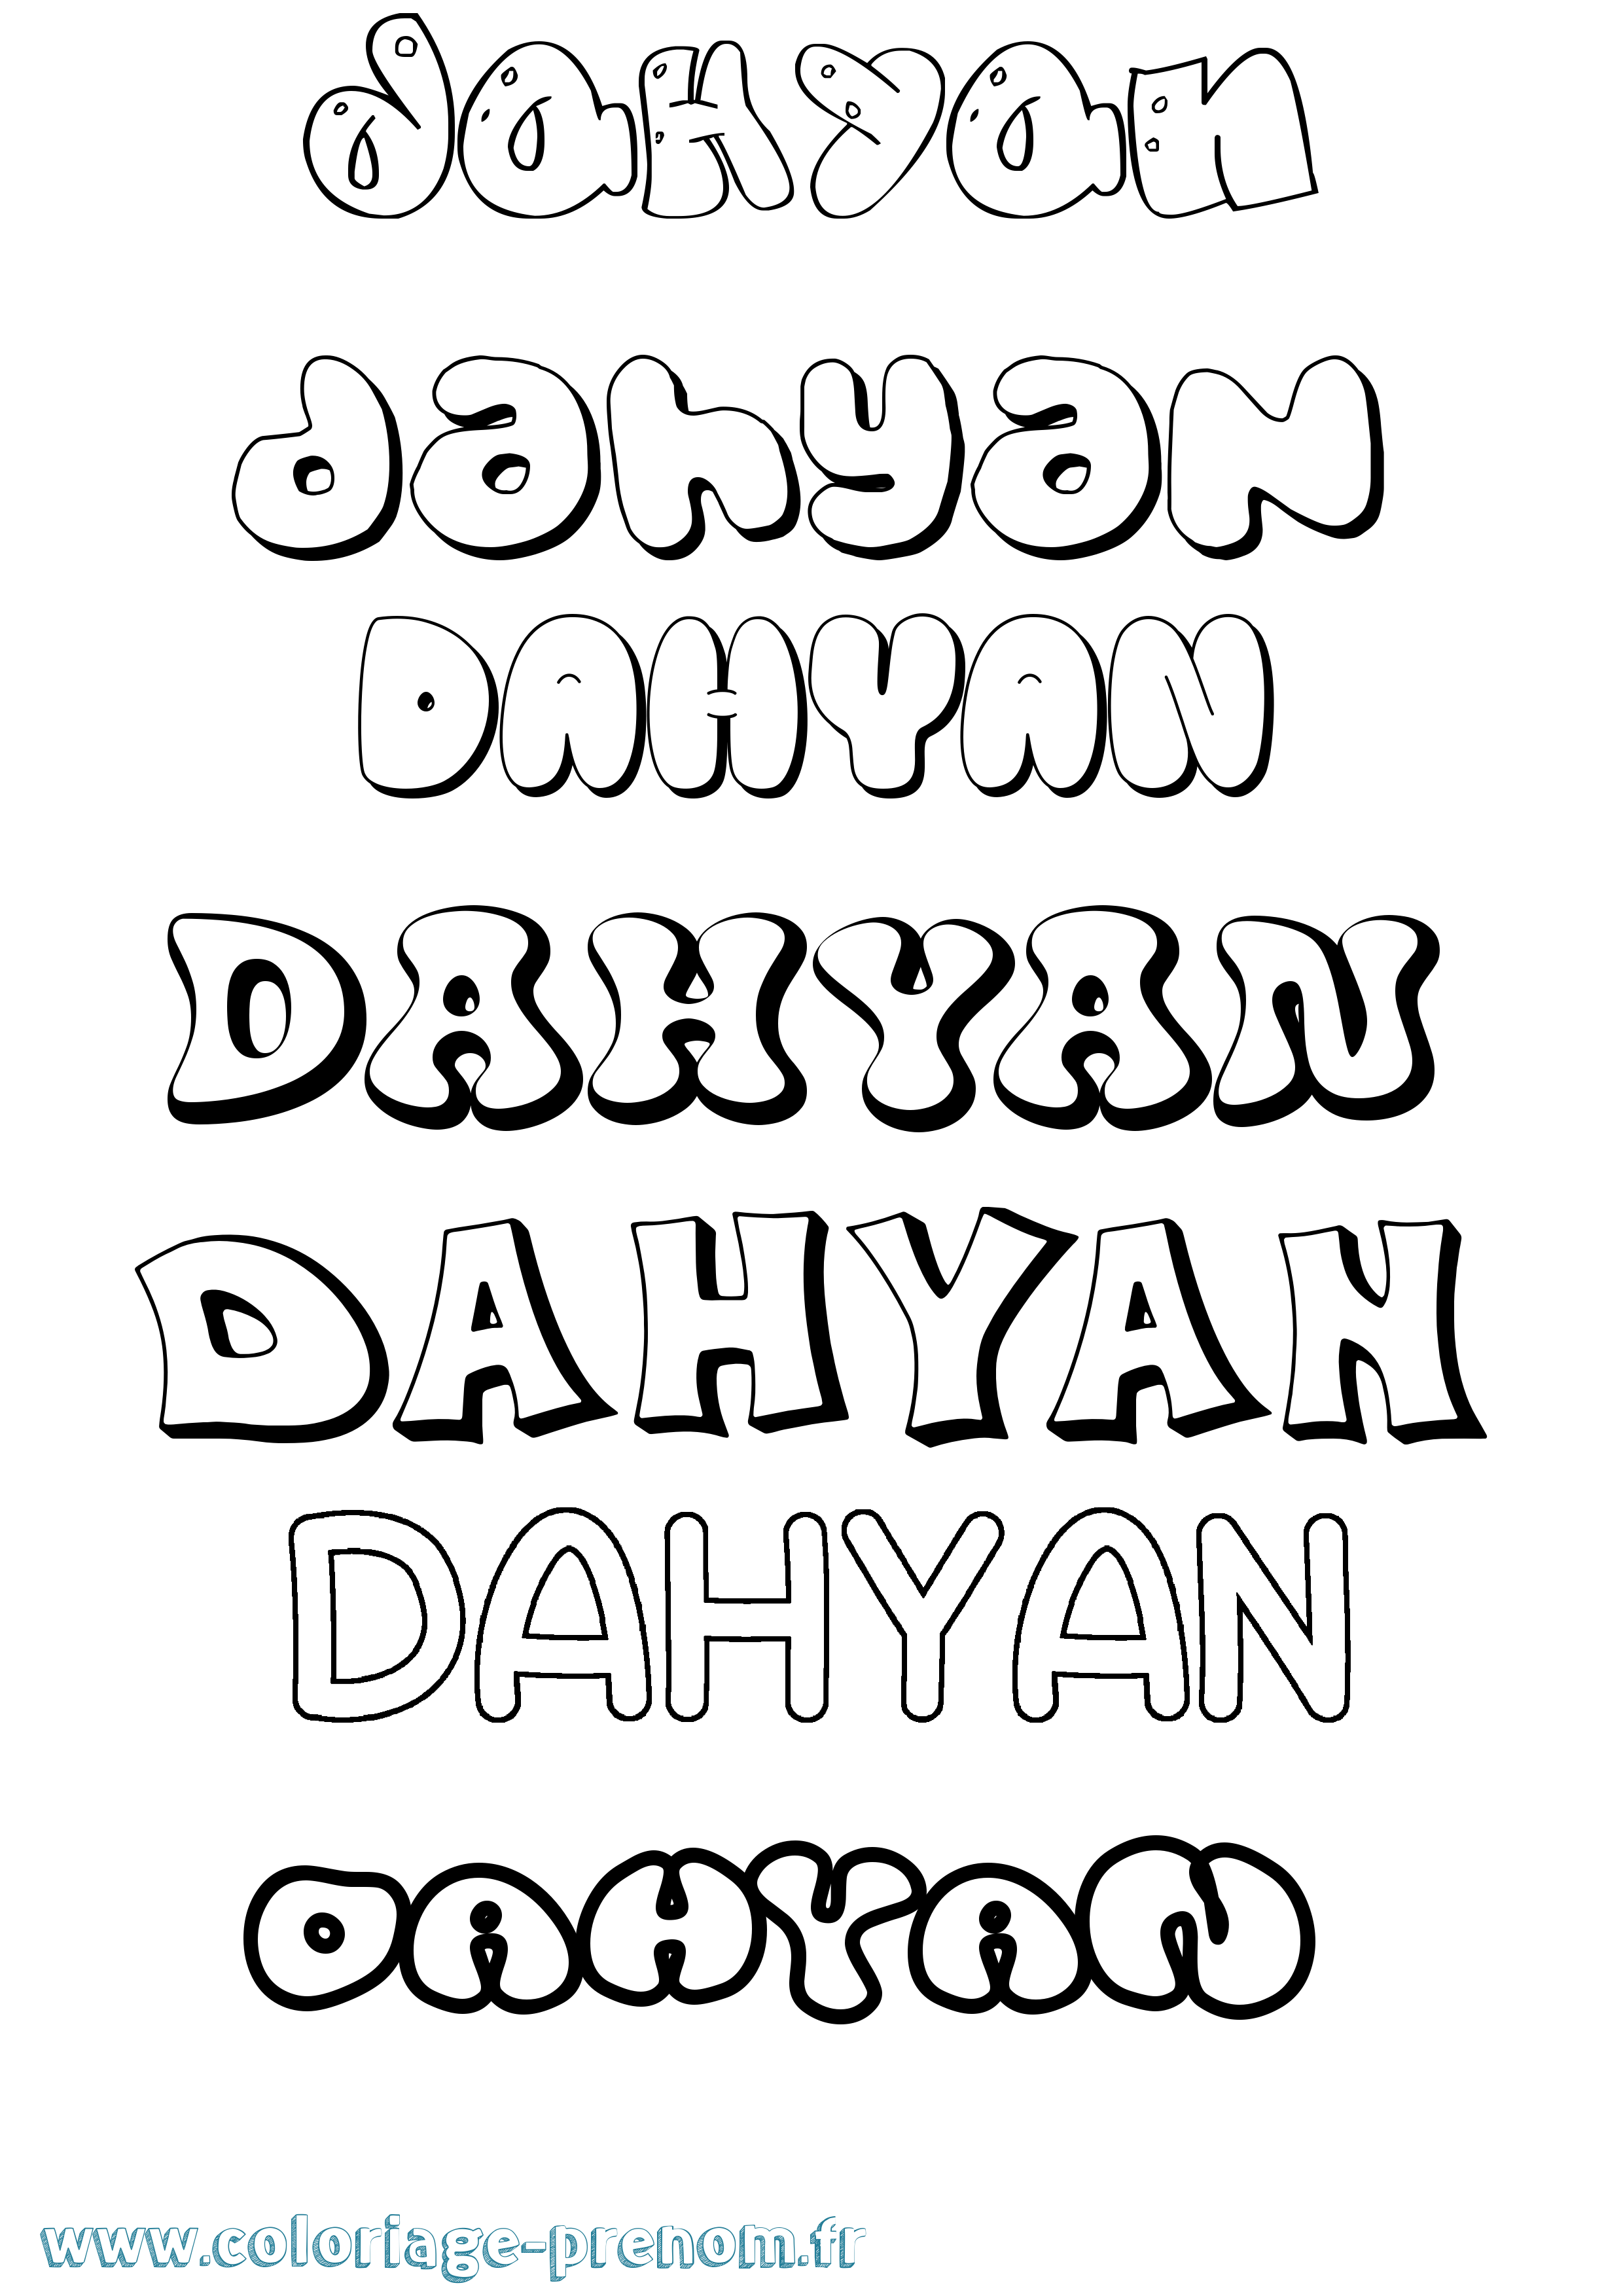 Coloriage prénom Dahyan Bubble